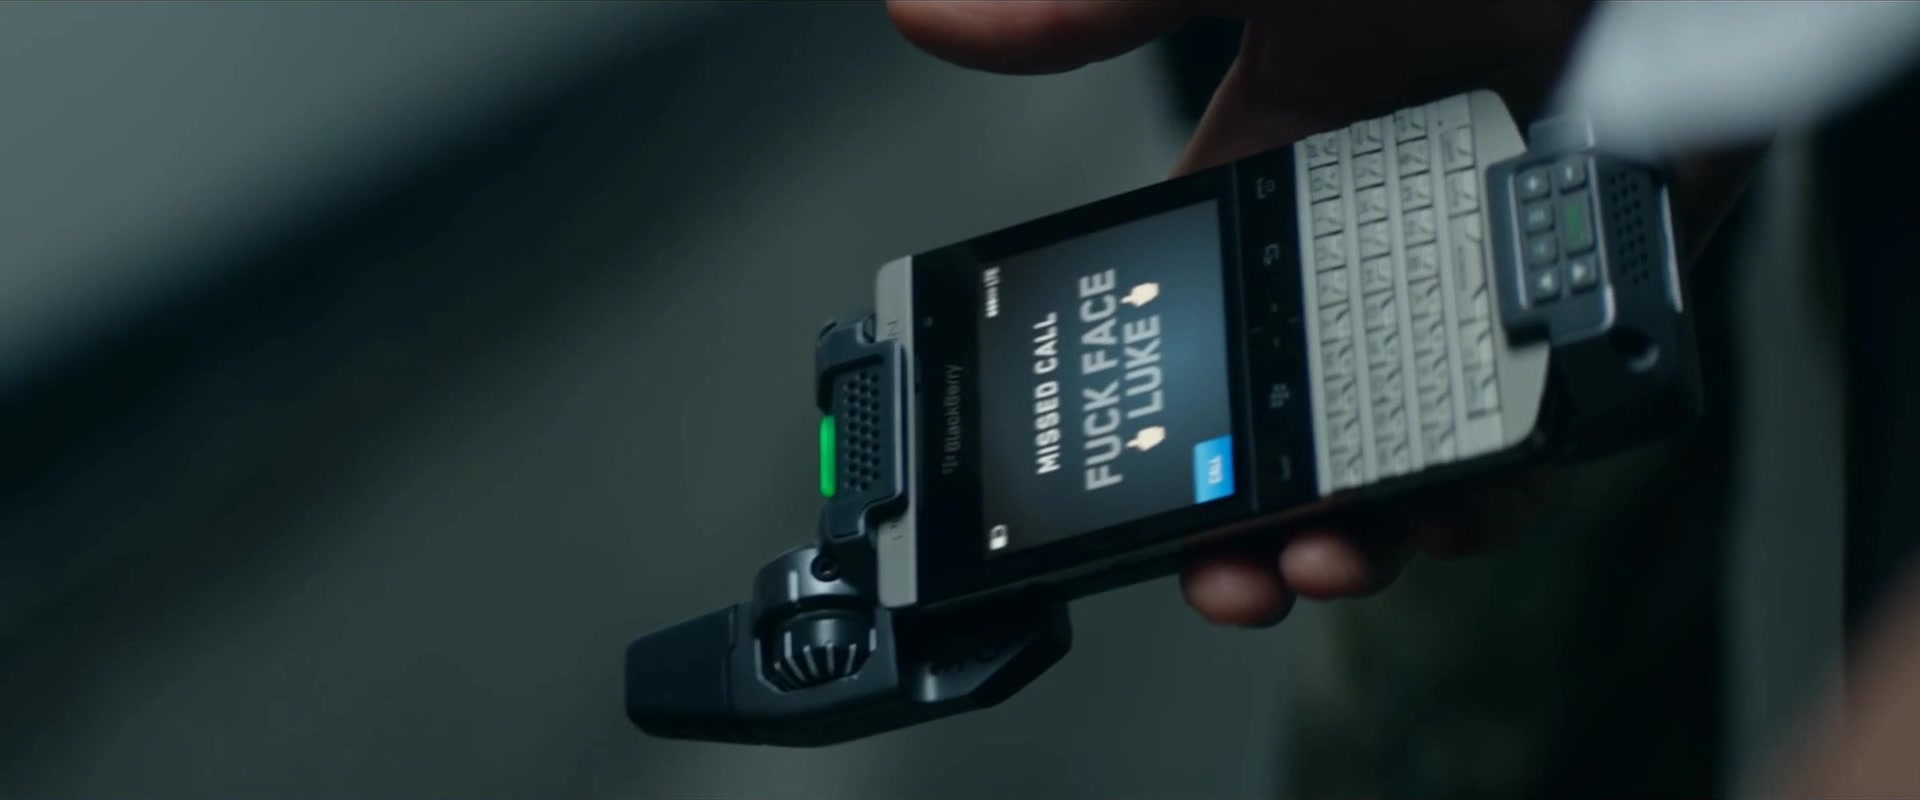 Blackberry Porsche Design Smartphone Used by Lauren Cohan in Mile 22 (2018) Movie1920 x 800